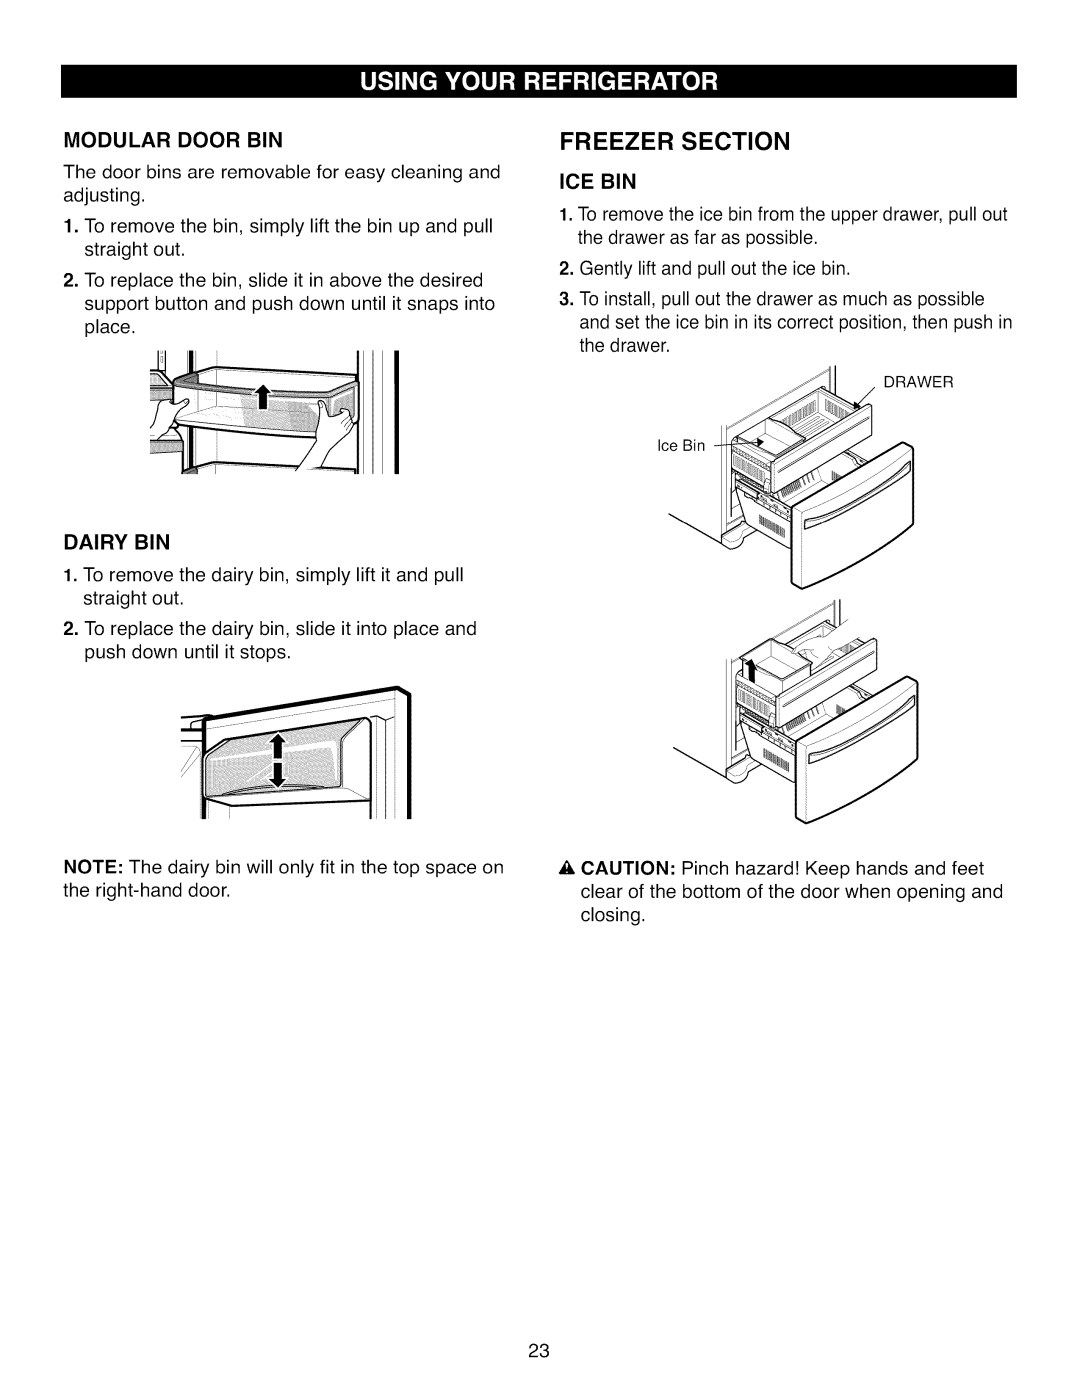 Kenmore 795.7104 manual Freezer Section, Modular Door Bin, Dairy Bin, Ice Bin 